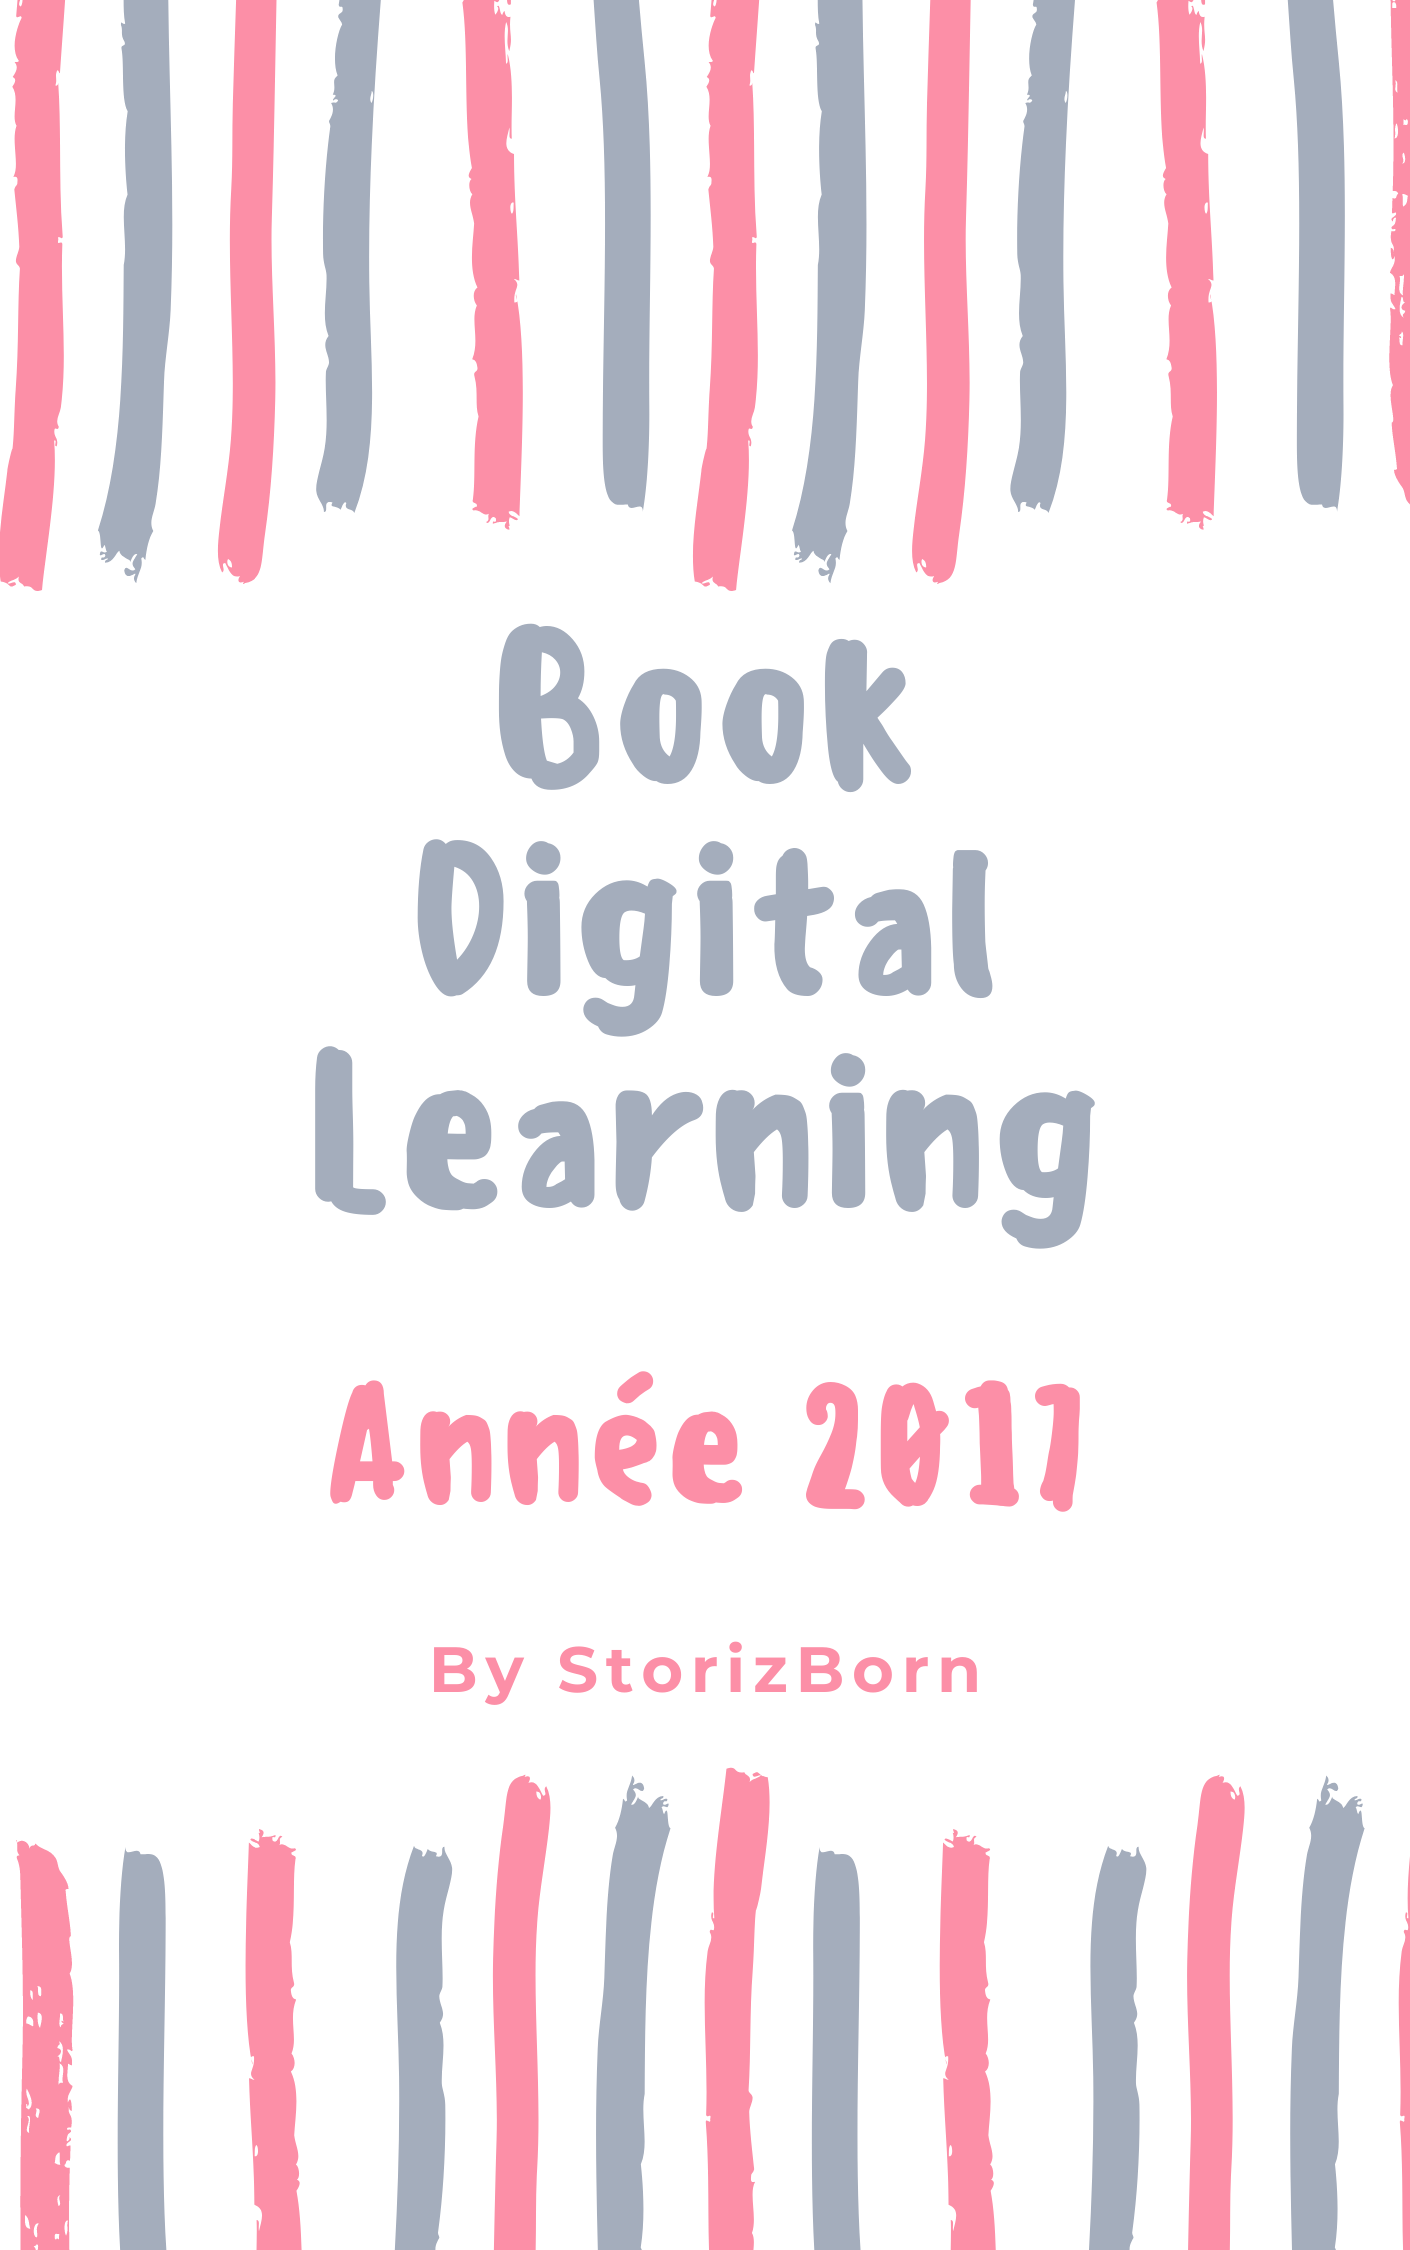 Book digital Learning - 2017